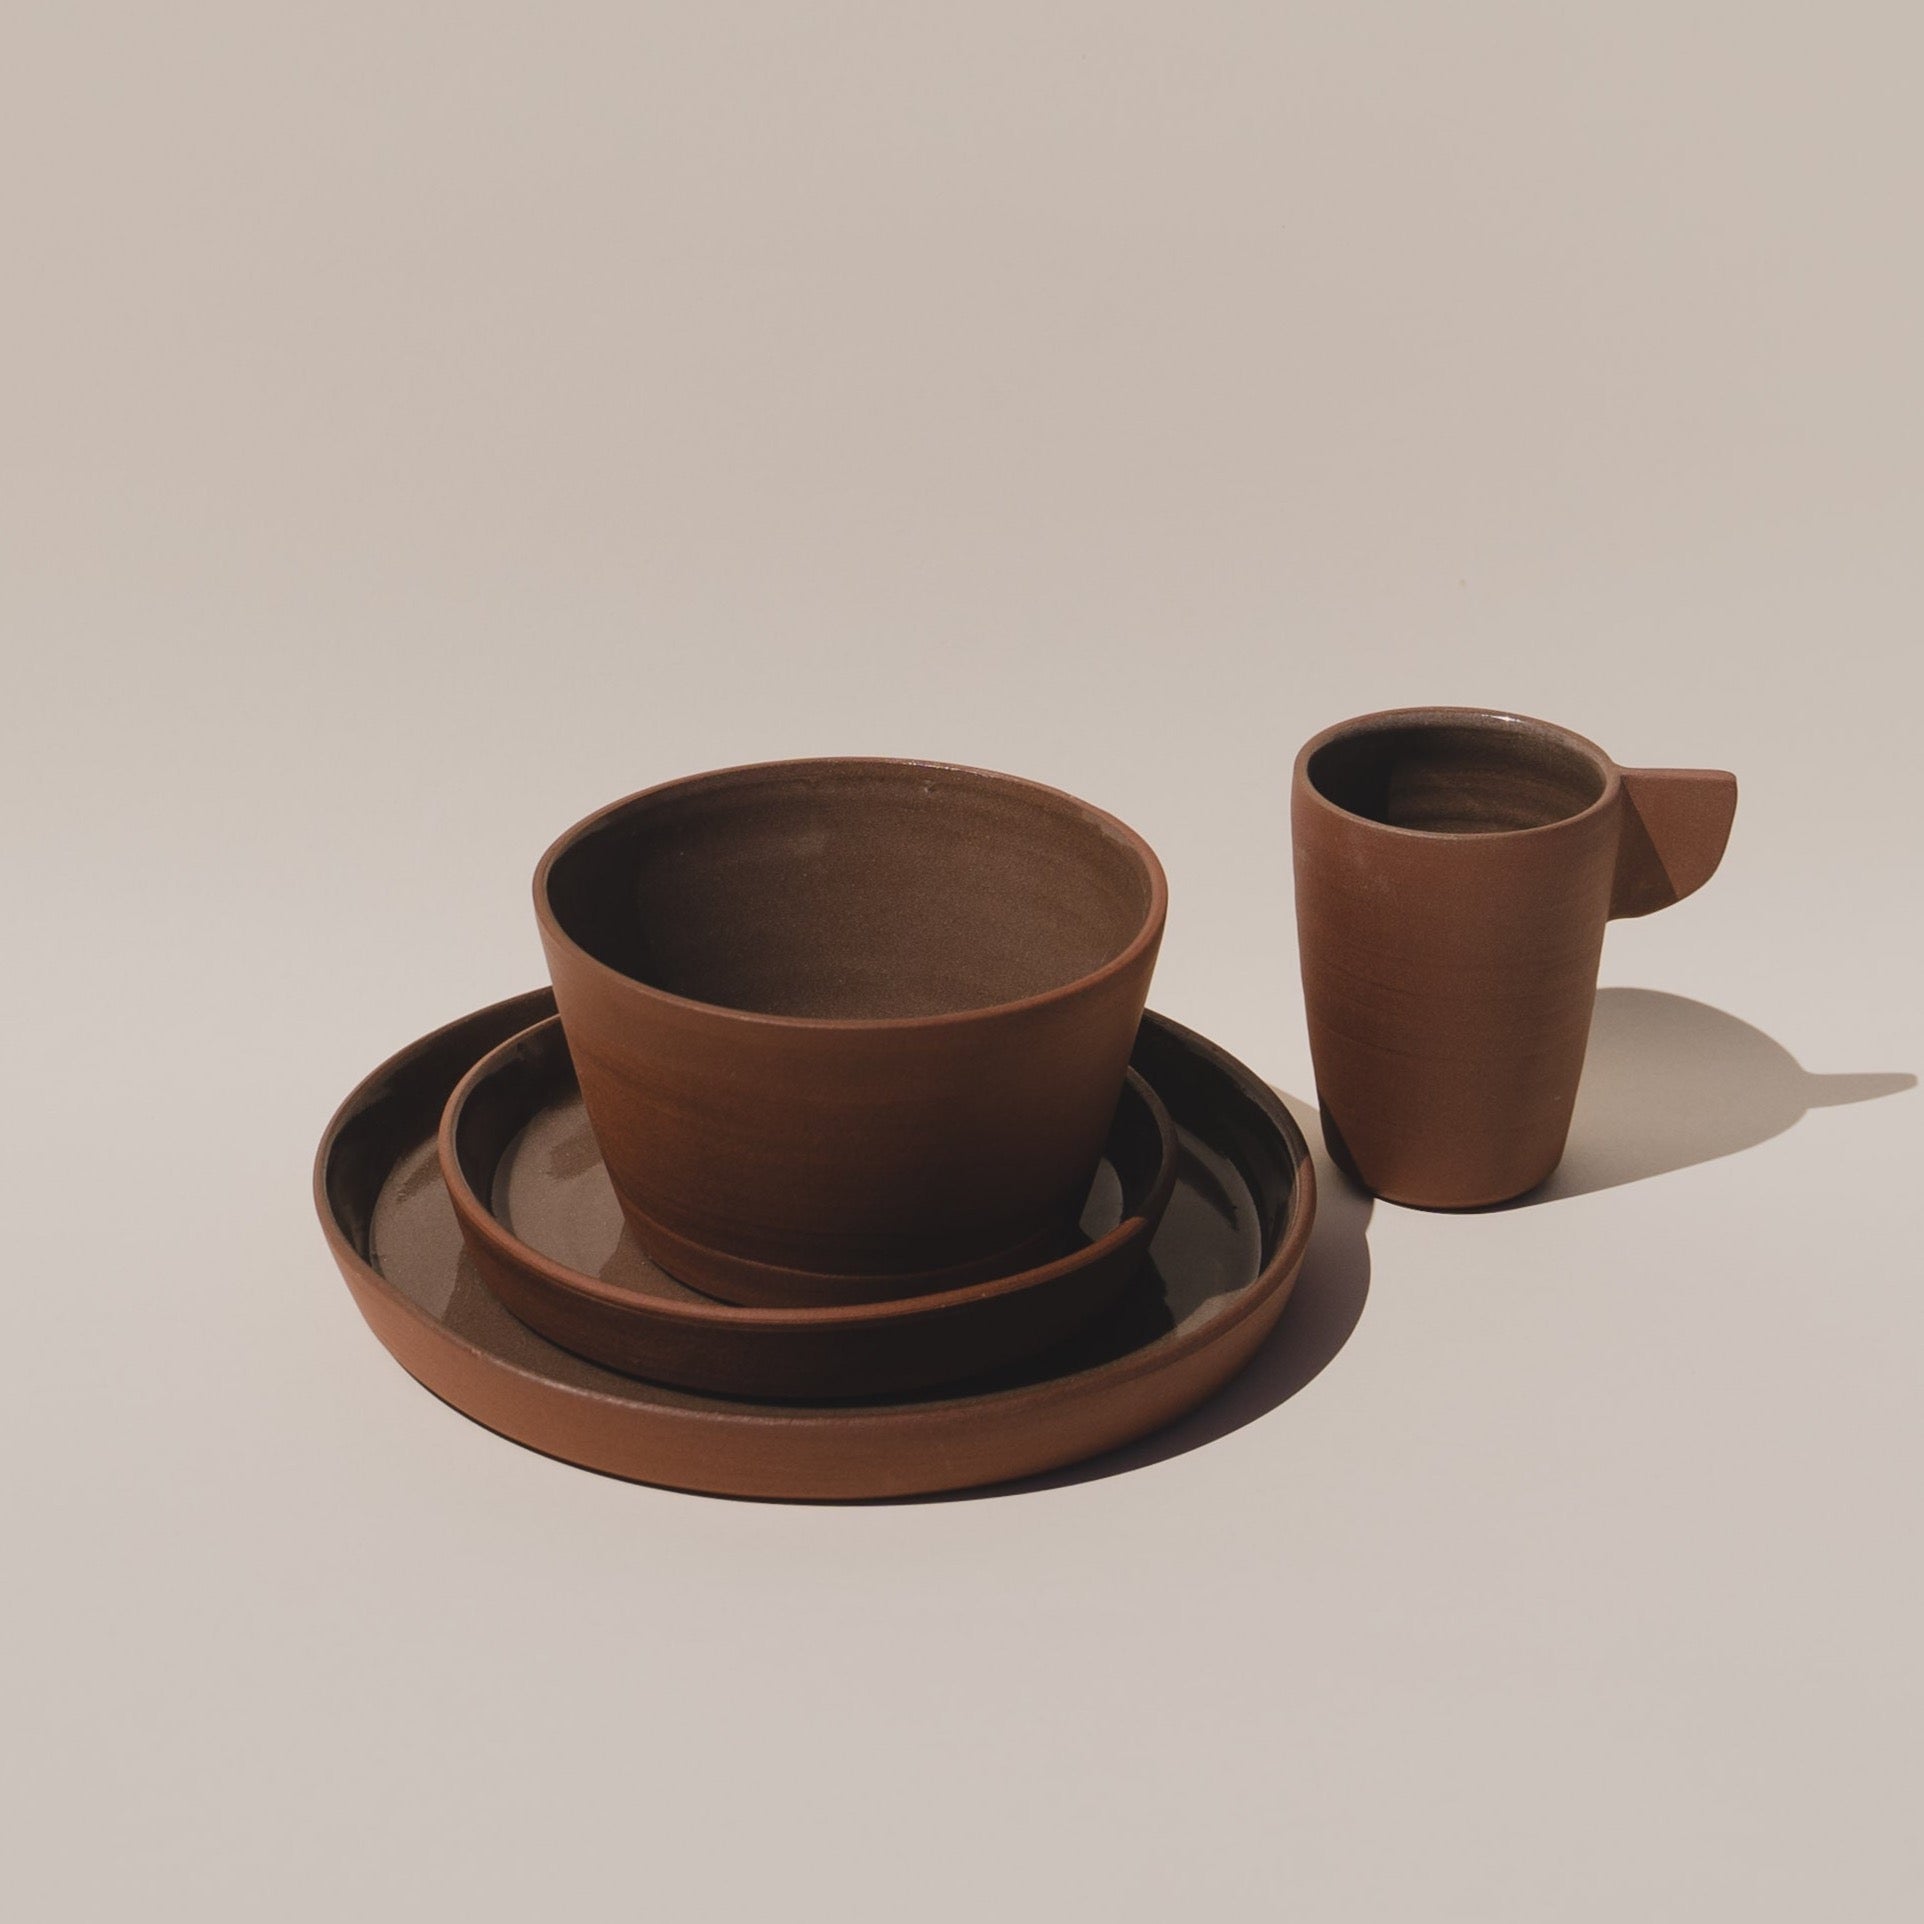 Ceramic Plate and Ceramic Dinner Set in natural brown colour